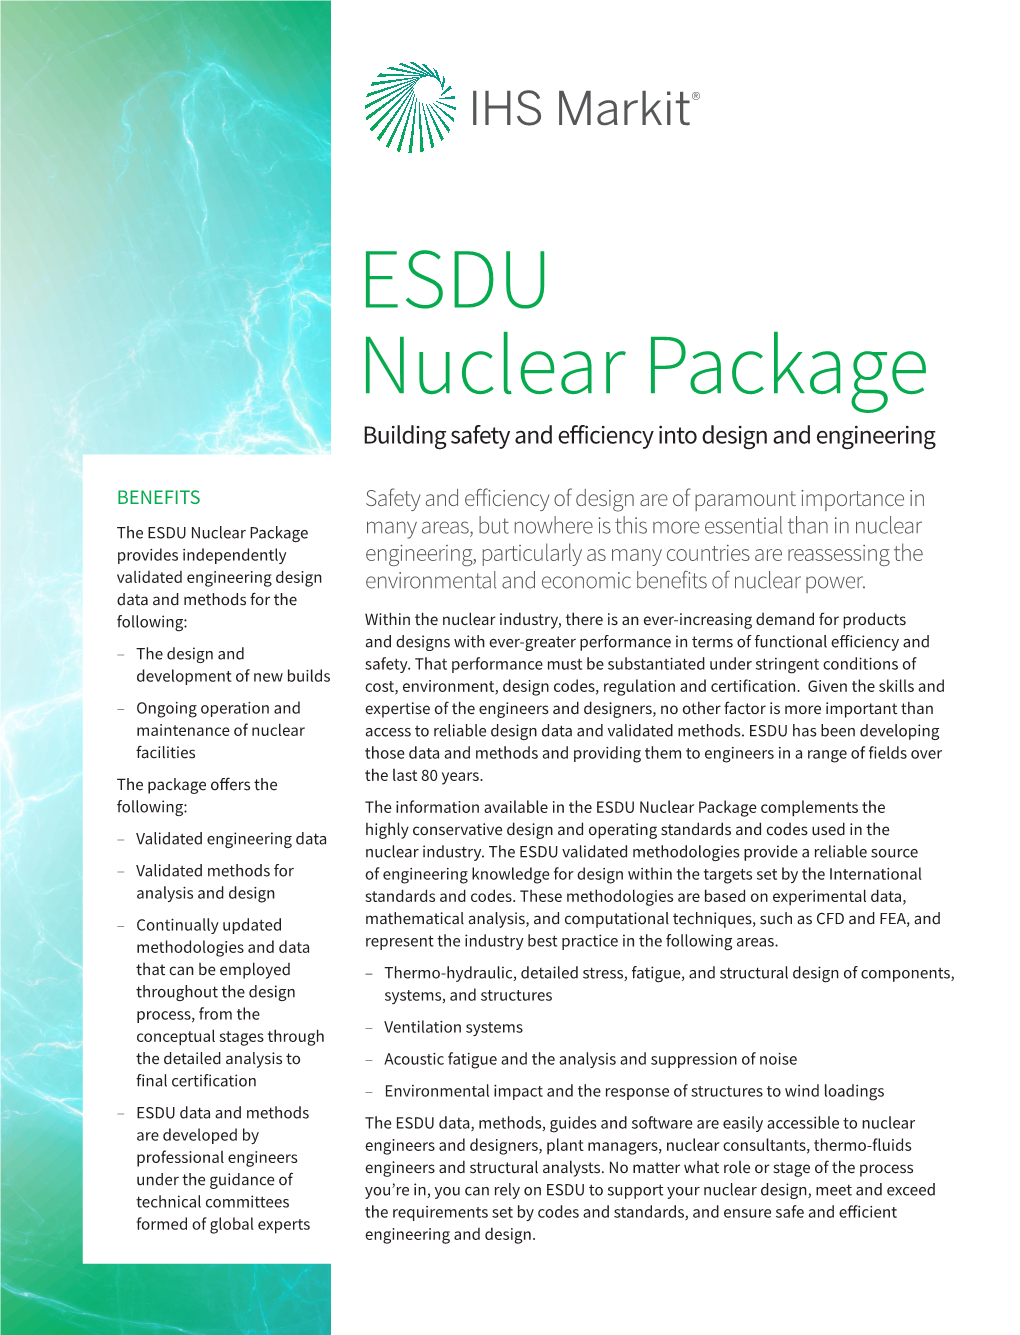 ESDU Nuclear Package Brochure